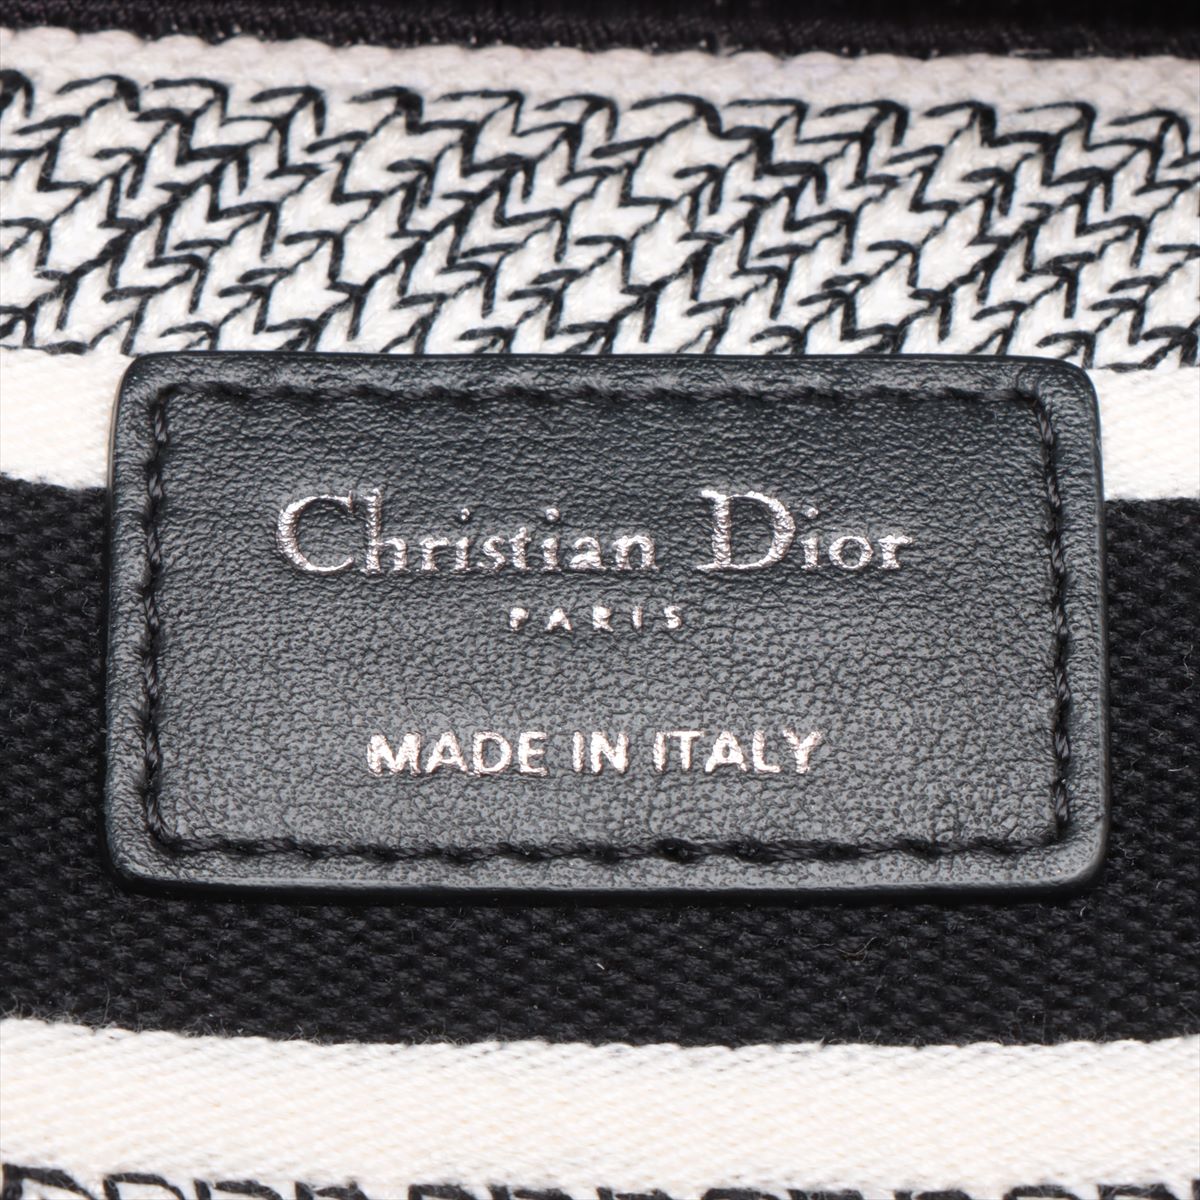 Christian Dior board 2WAY Handbag Black X White